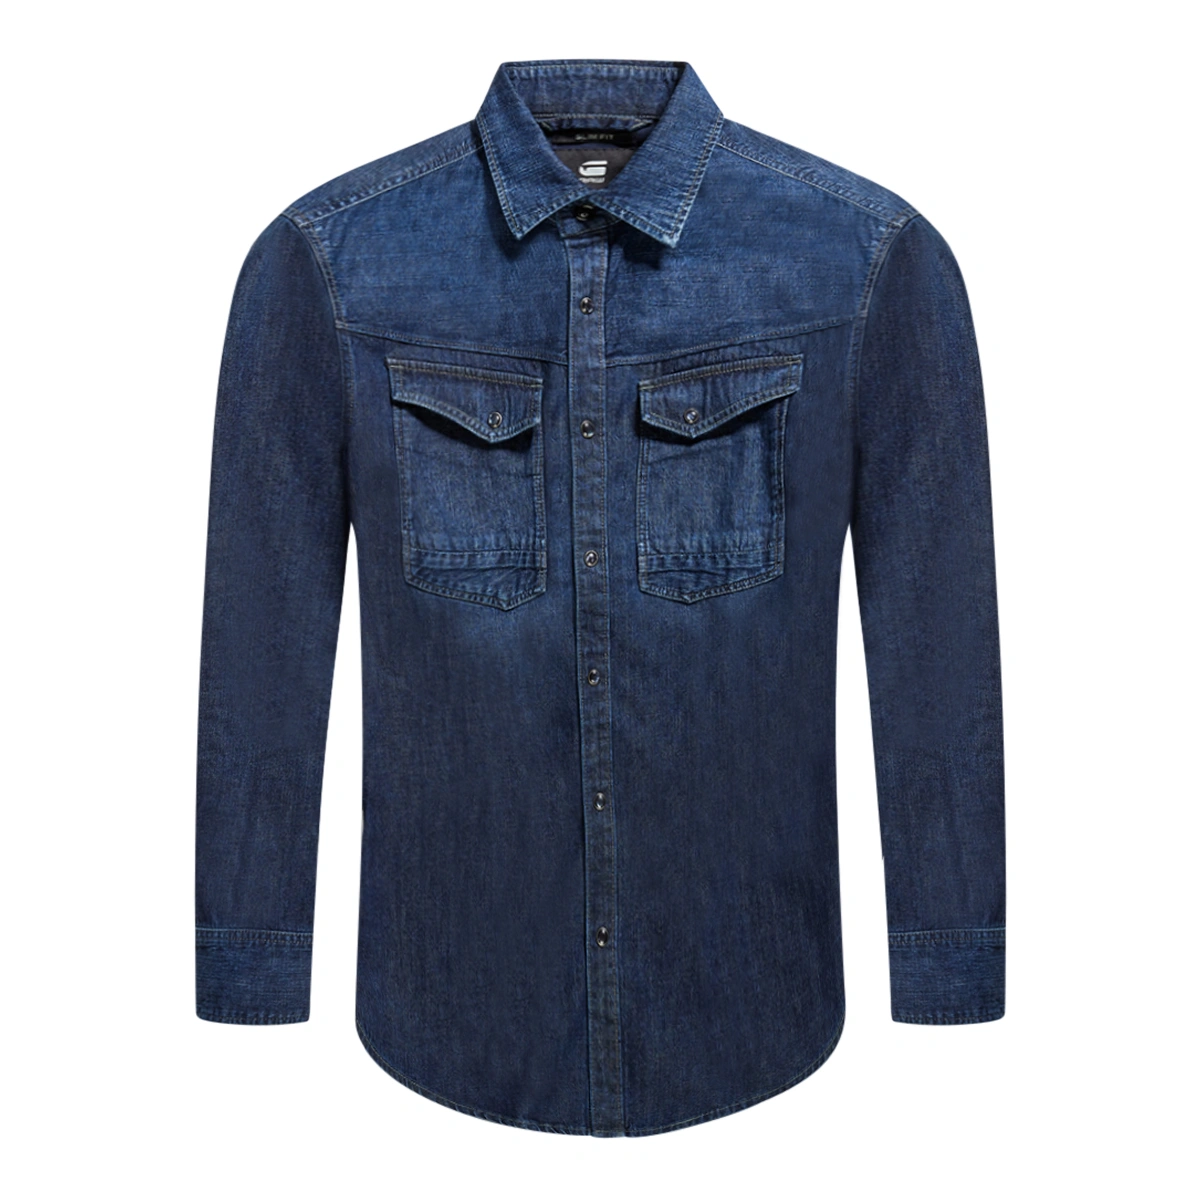 G-Star | Jackets & Coats | Gstar Raw 33 Vesp Blue Striped Denim Trucker  Jacket Size Small Nwt | Poshmark